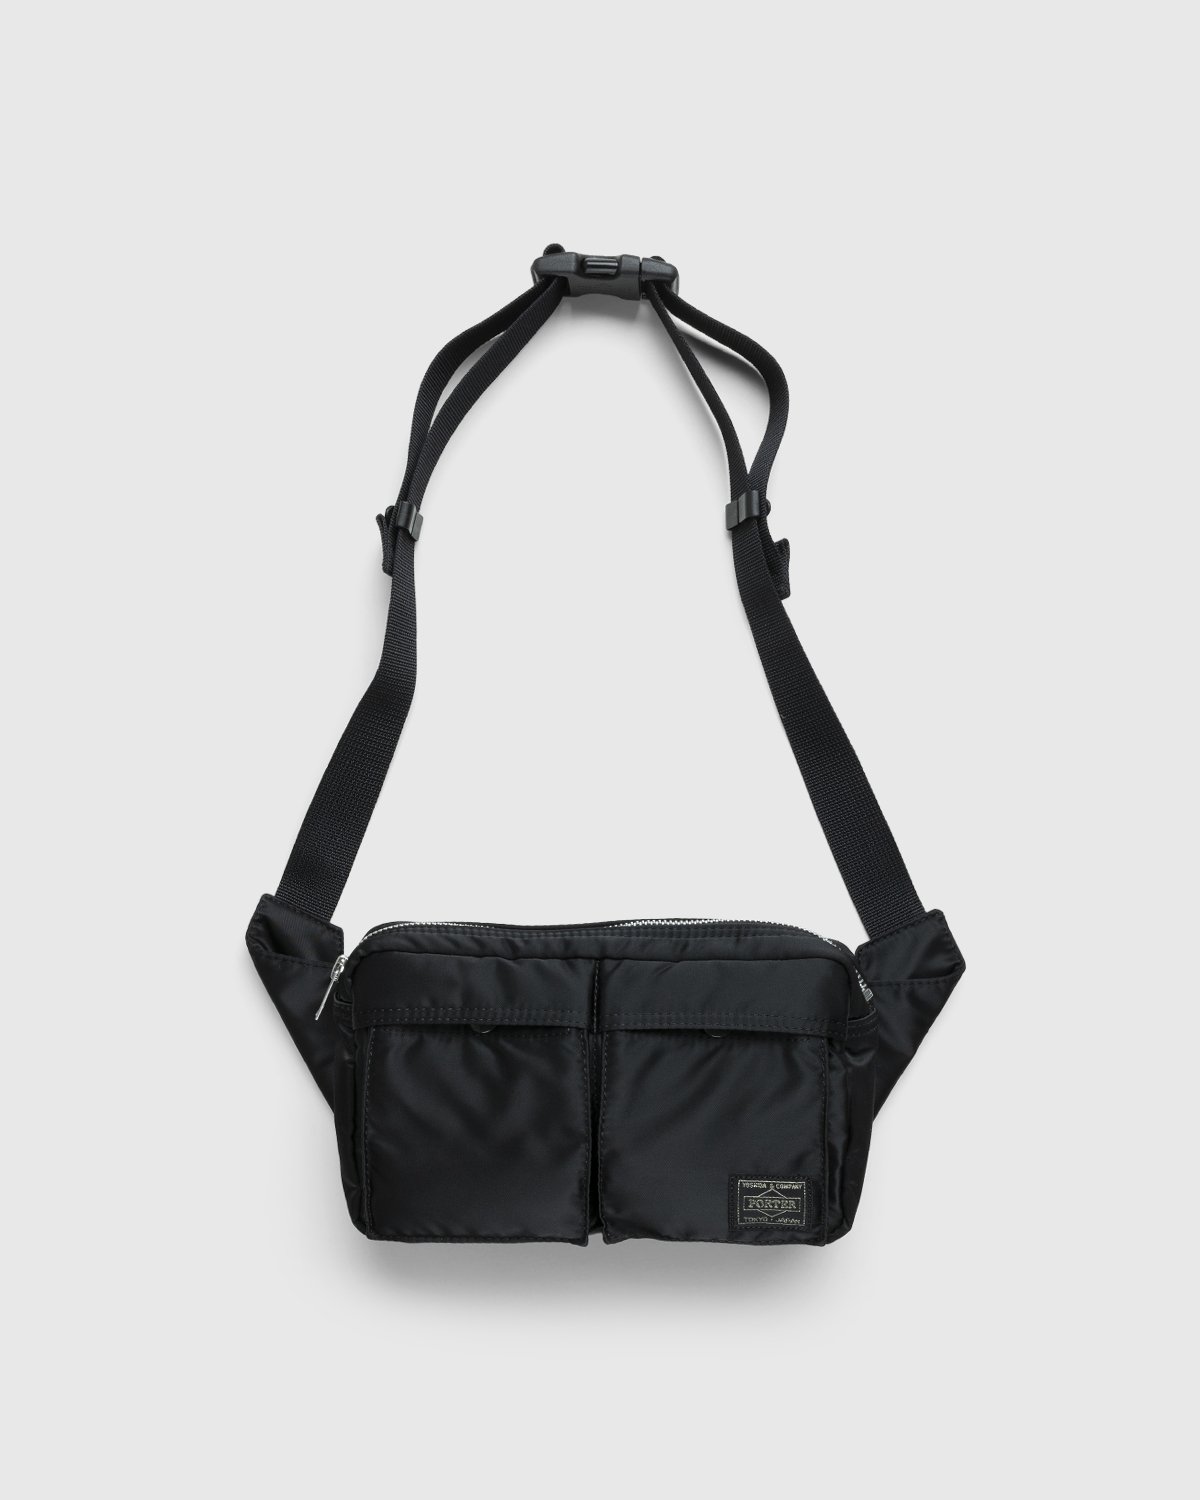 Porter-Yoshida & Co. - Tanker Waist Belt Black - Accessories - Black - Image 1